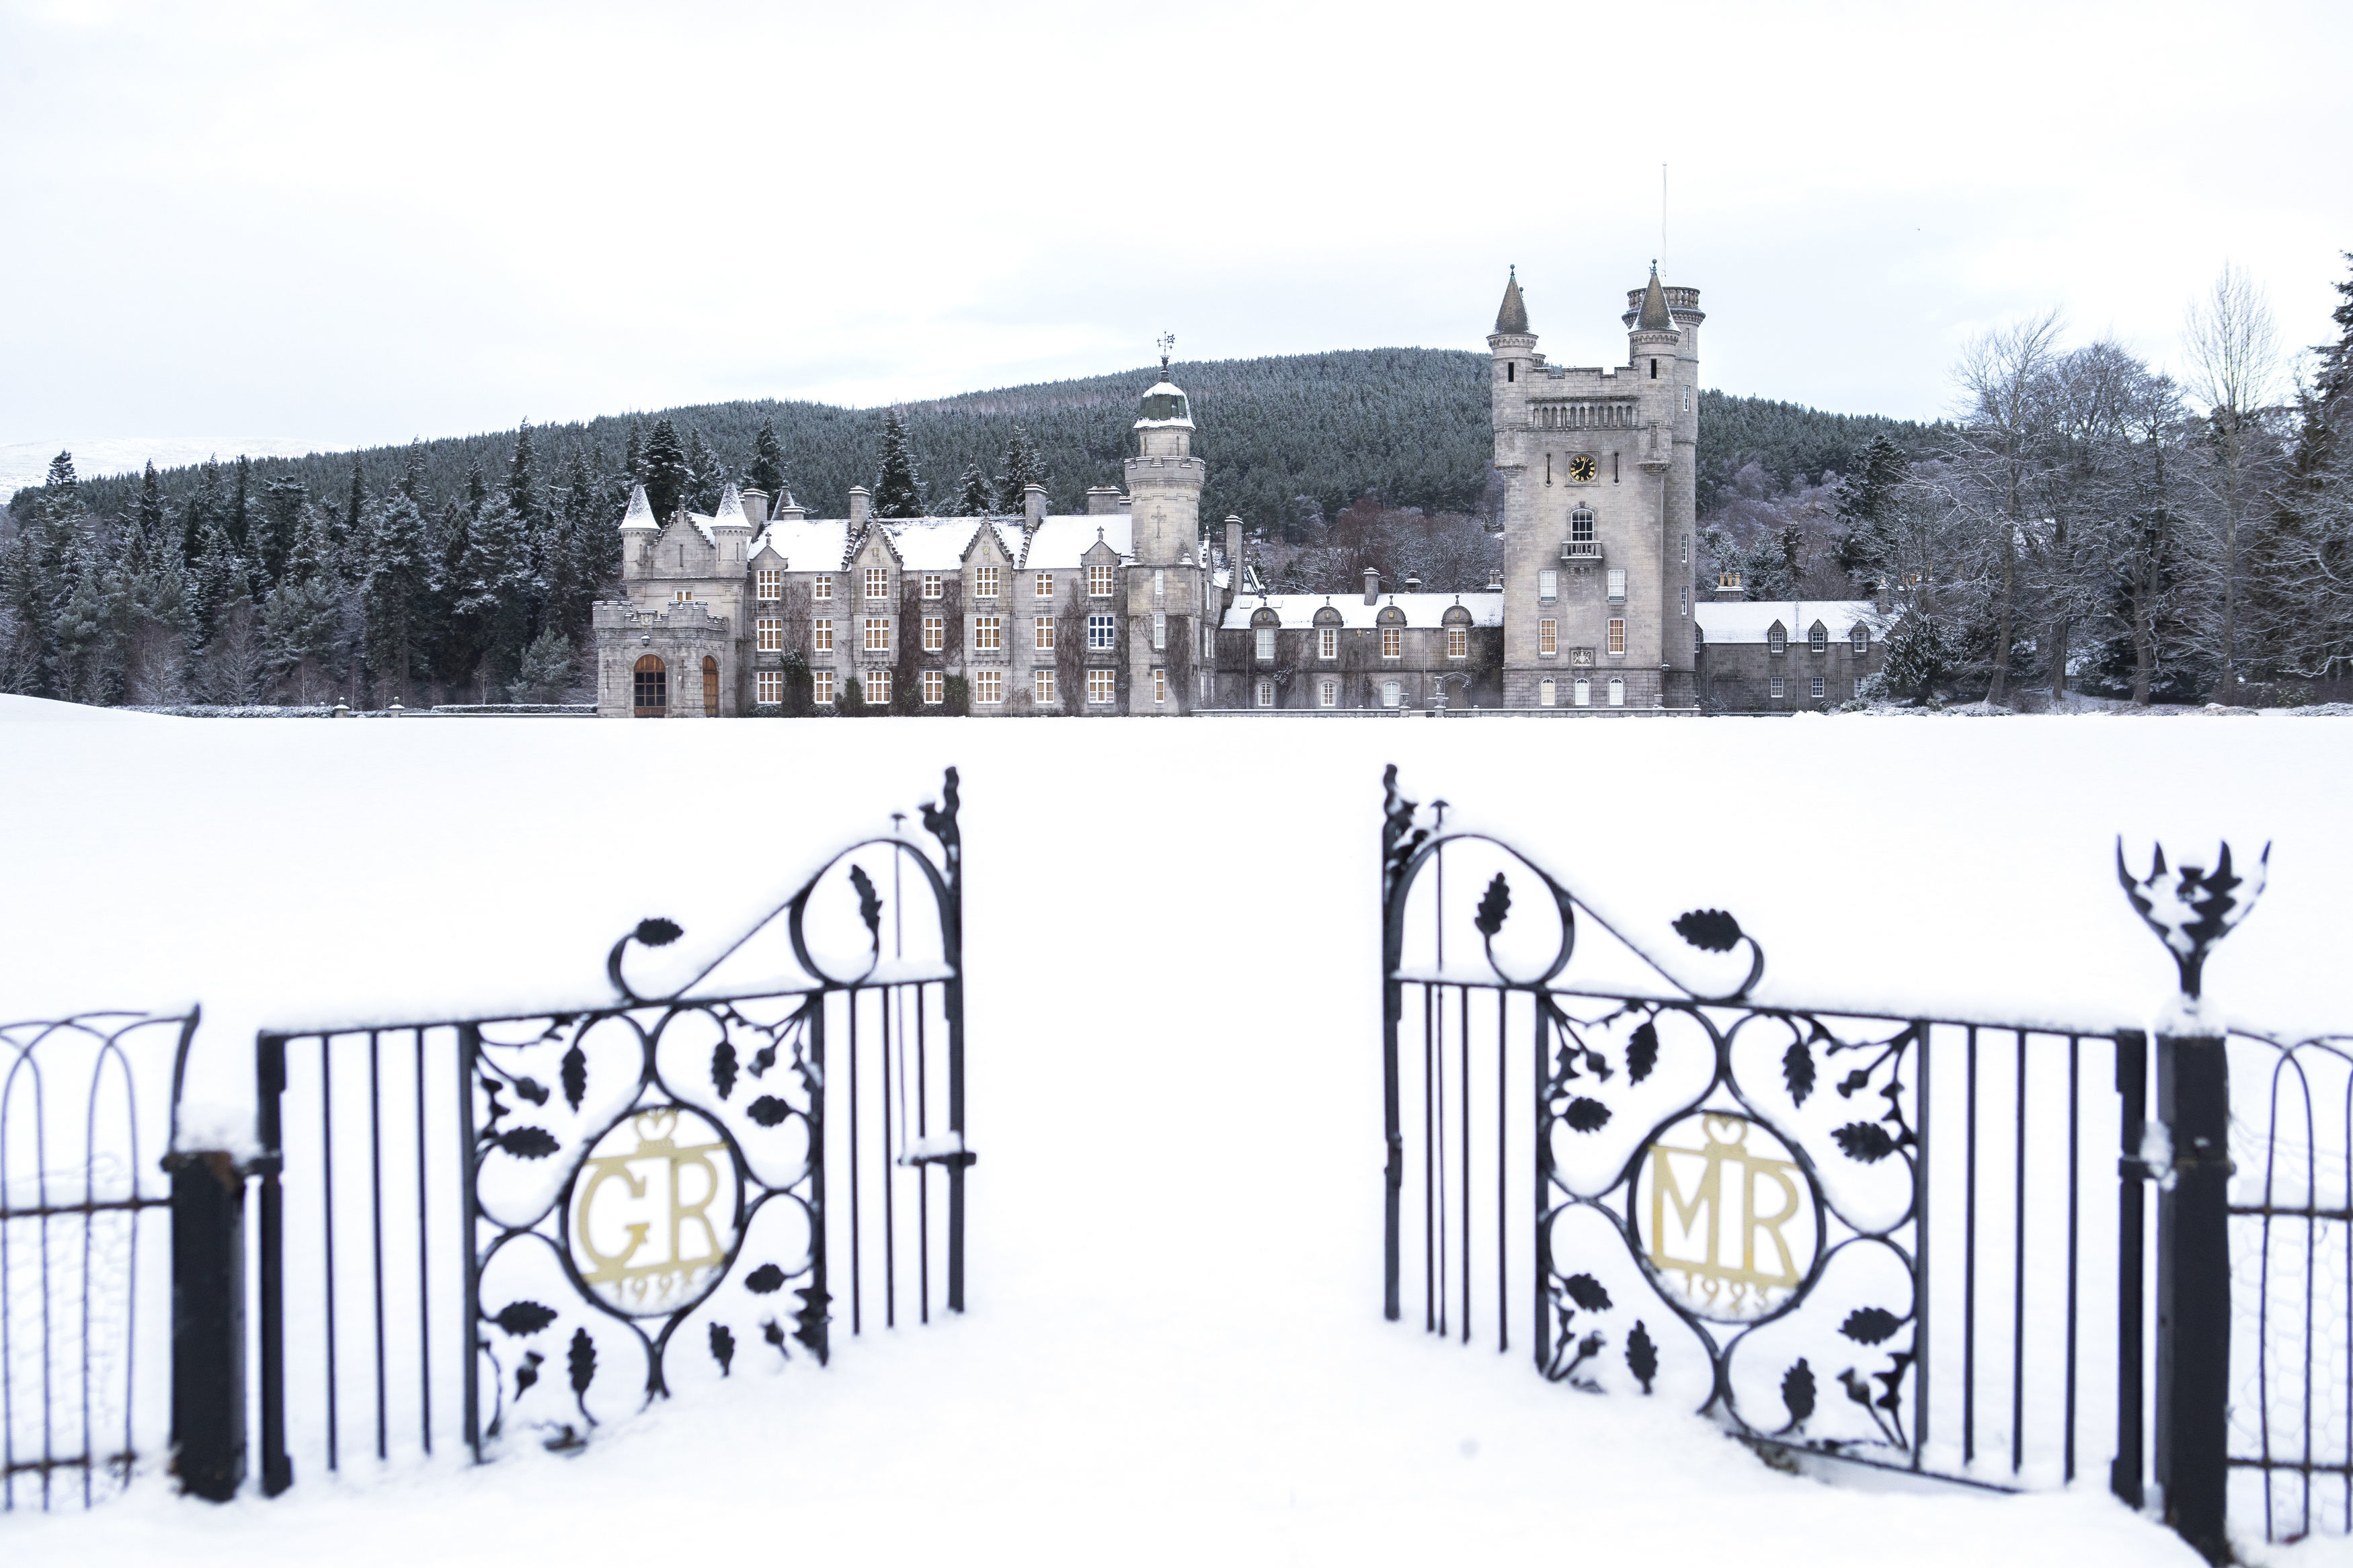 Balmoral Castle, Royal Deeside, in the snow.